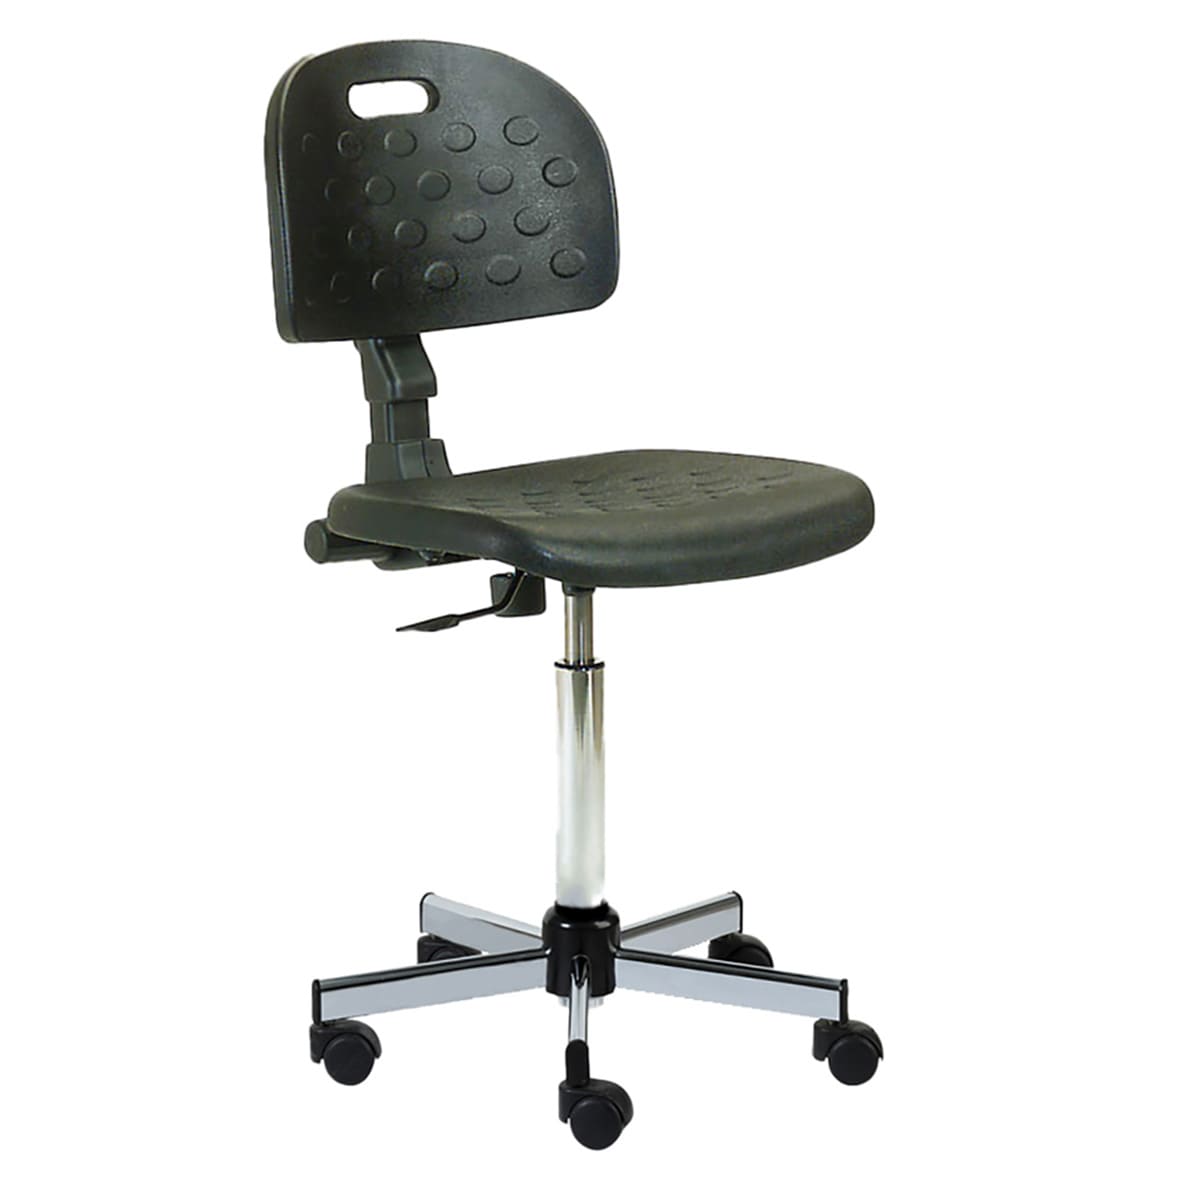 Chair with polyurethane rectangular seat, chromed base